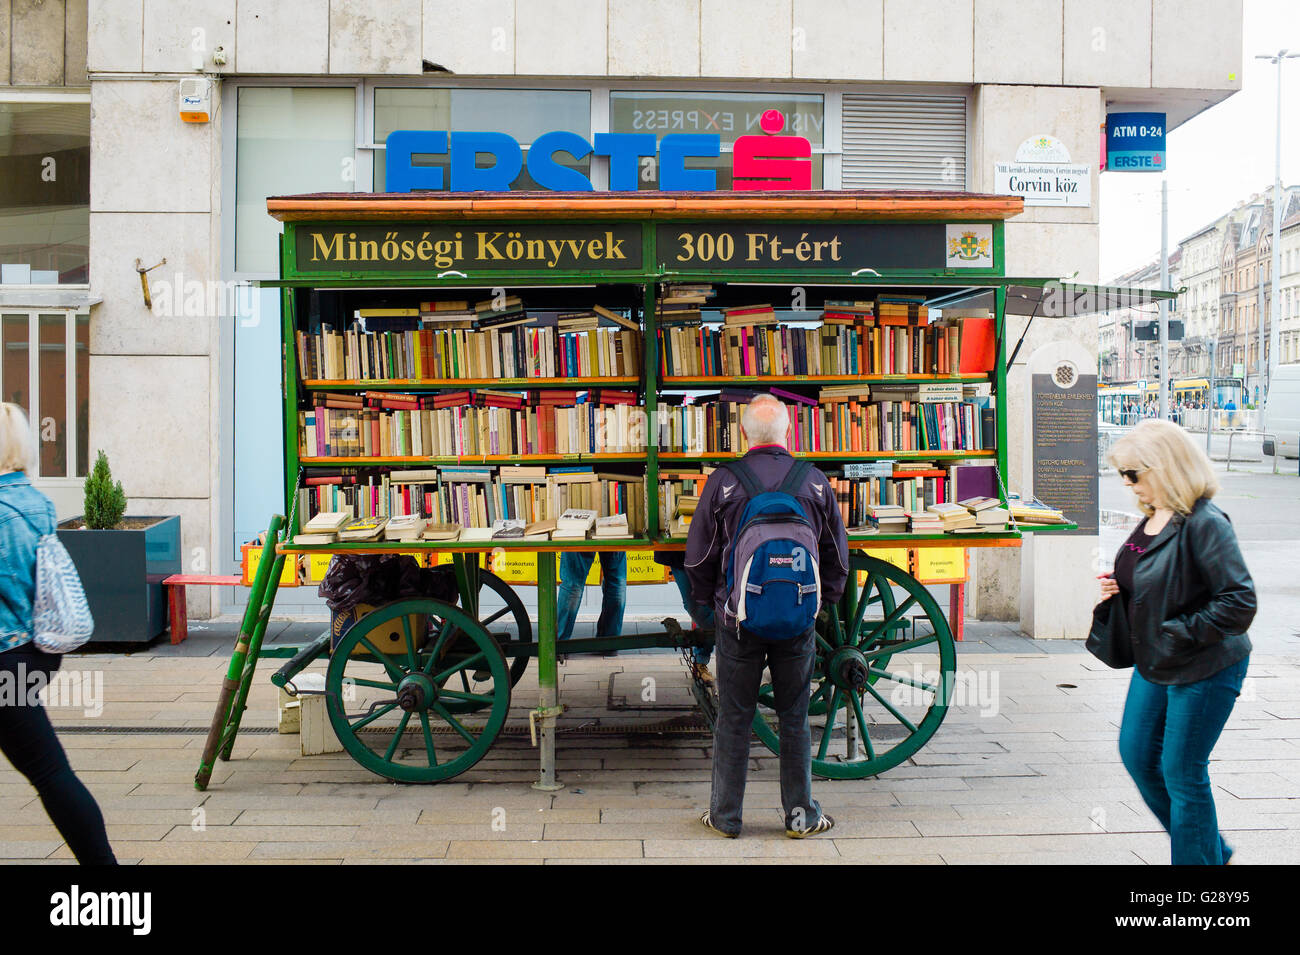 Un carrito móvil de venta de libros de segunda mano en Corvin köz, Budapest Foto de stock